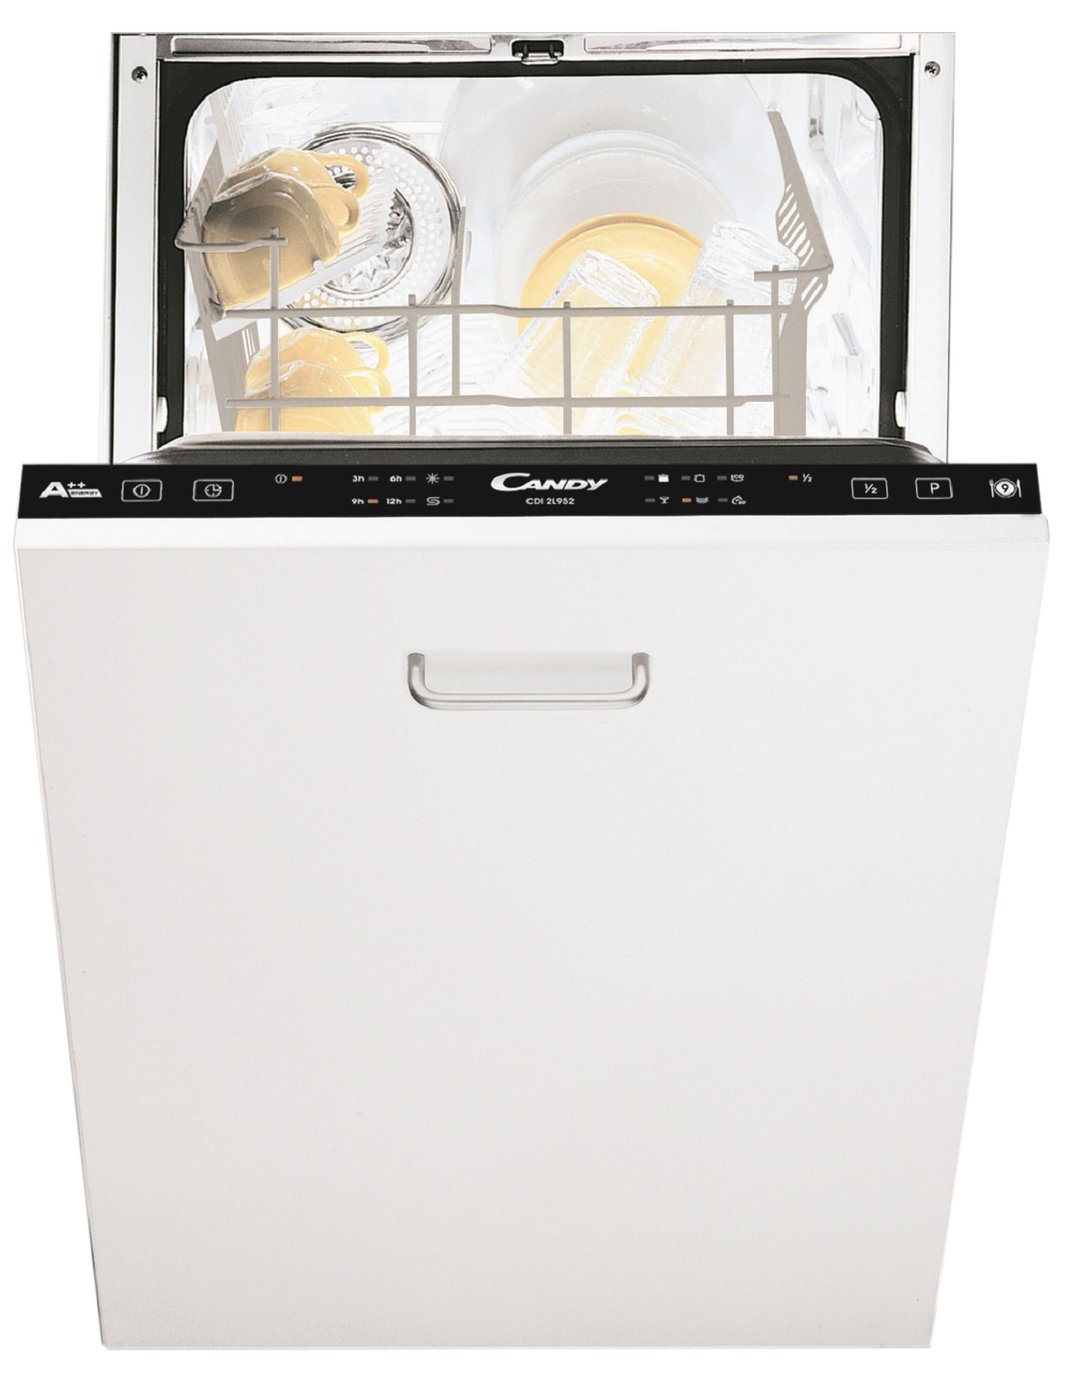 integrated dishwasher sale argos